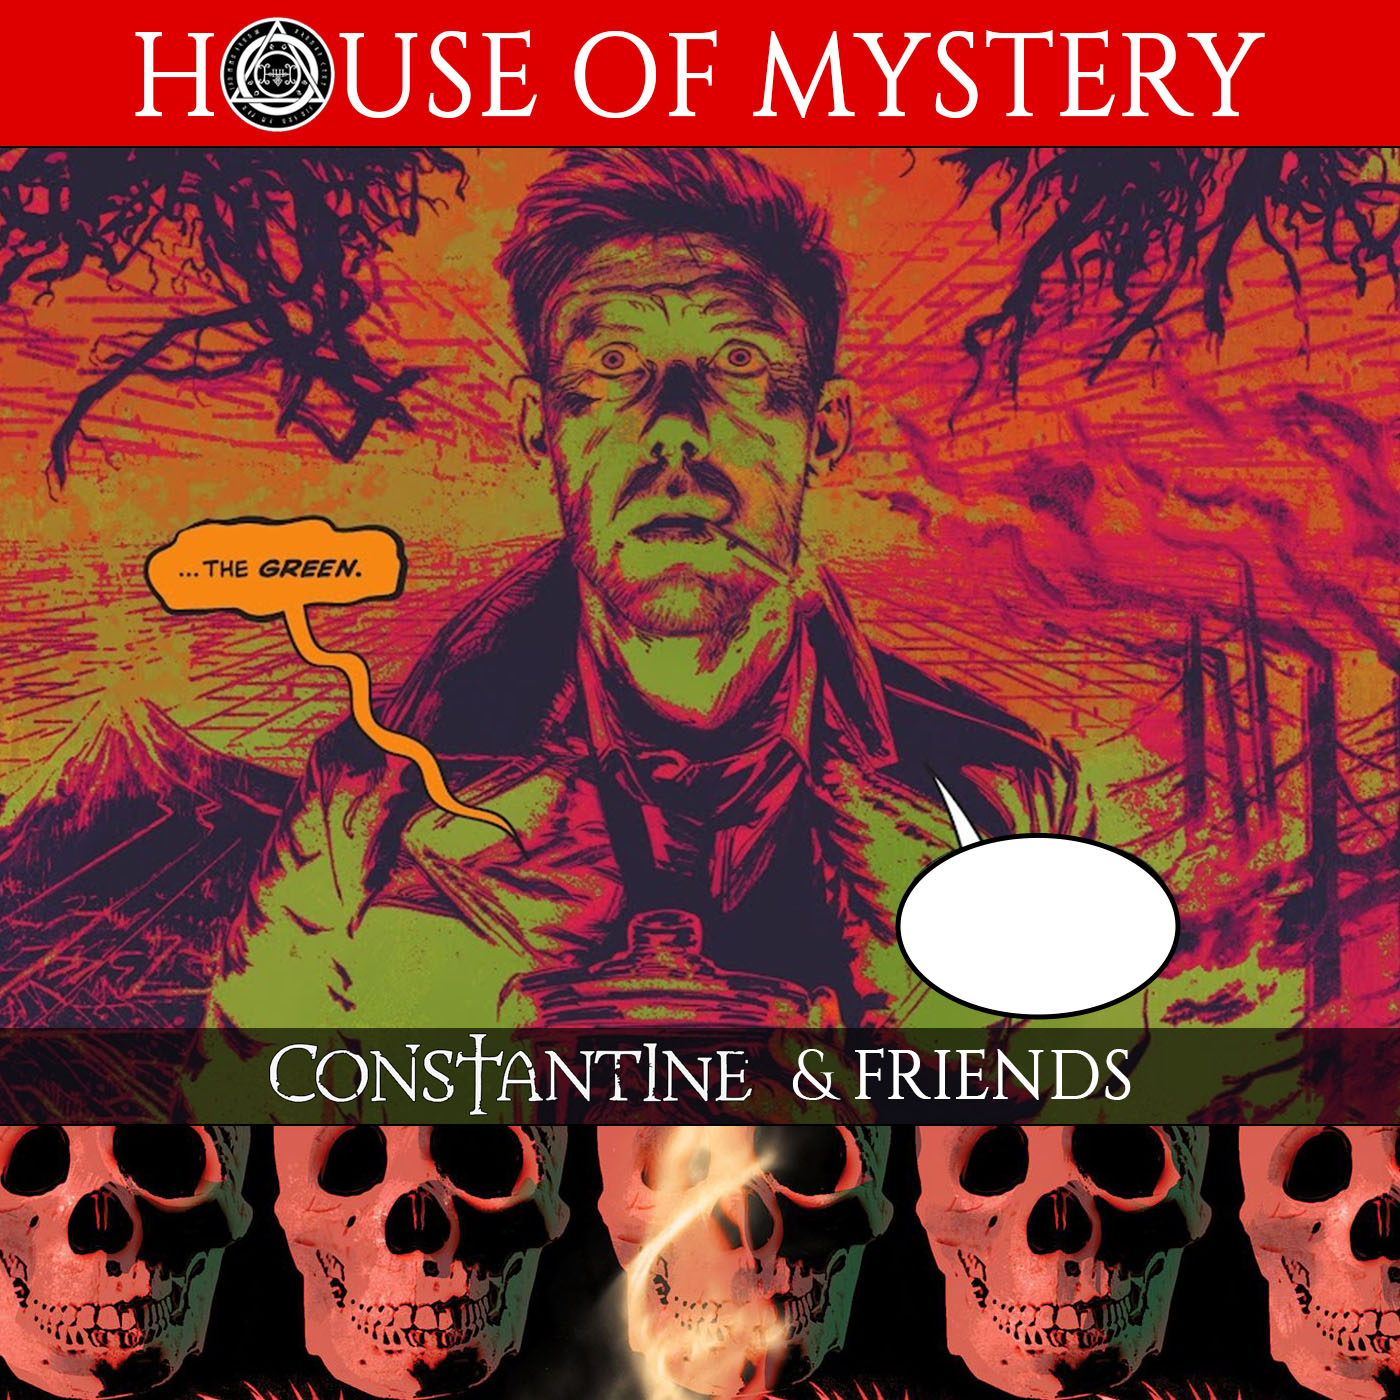 John Constantine: Hellblazer – Dead in America #2